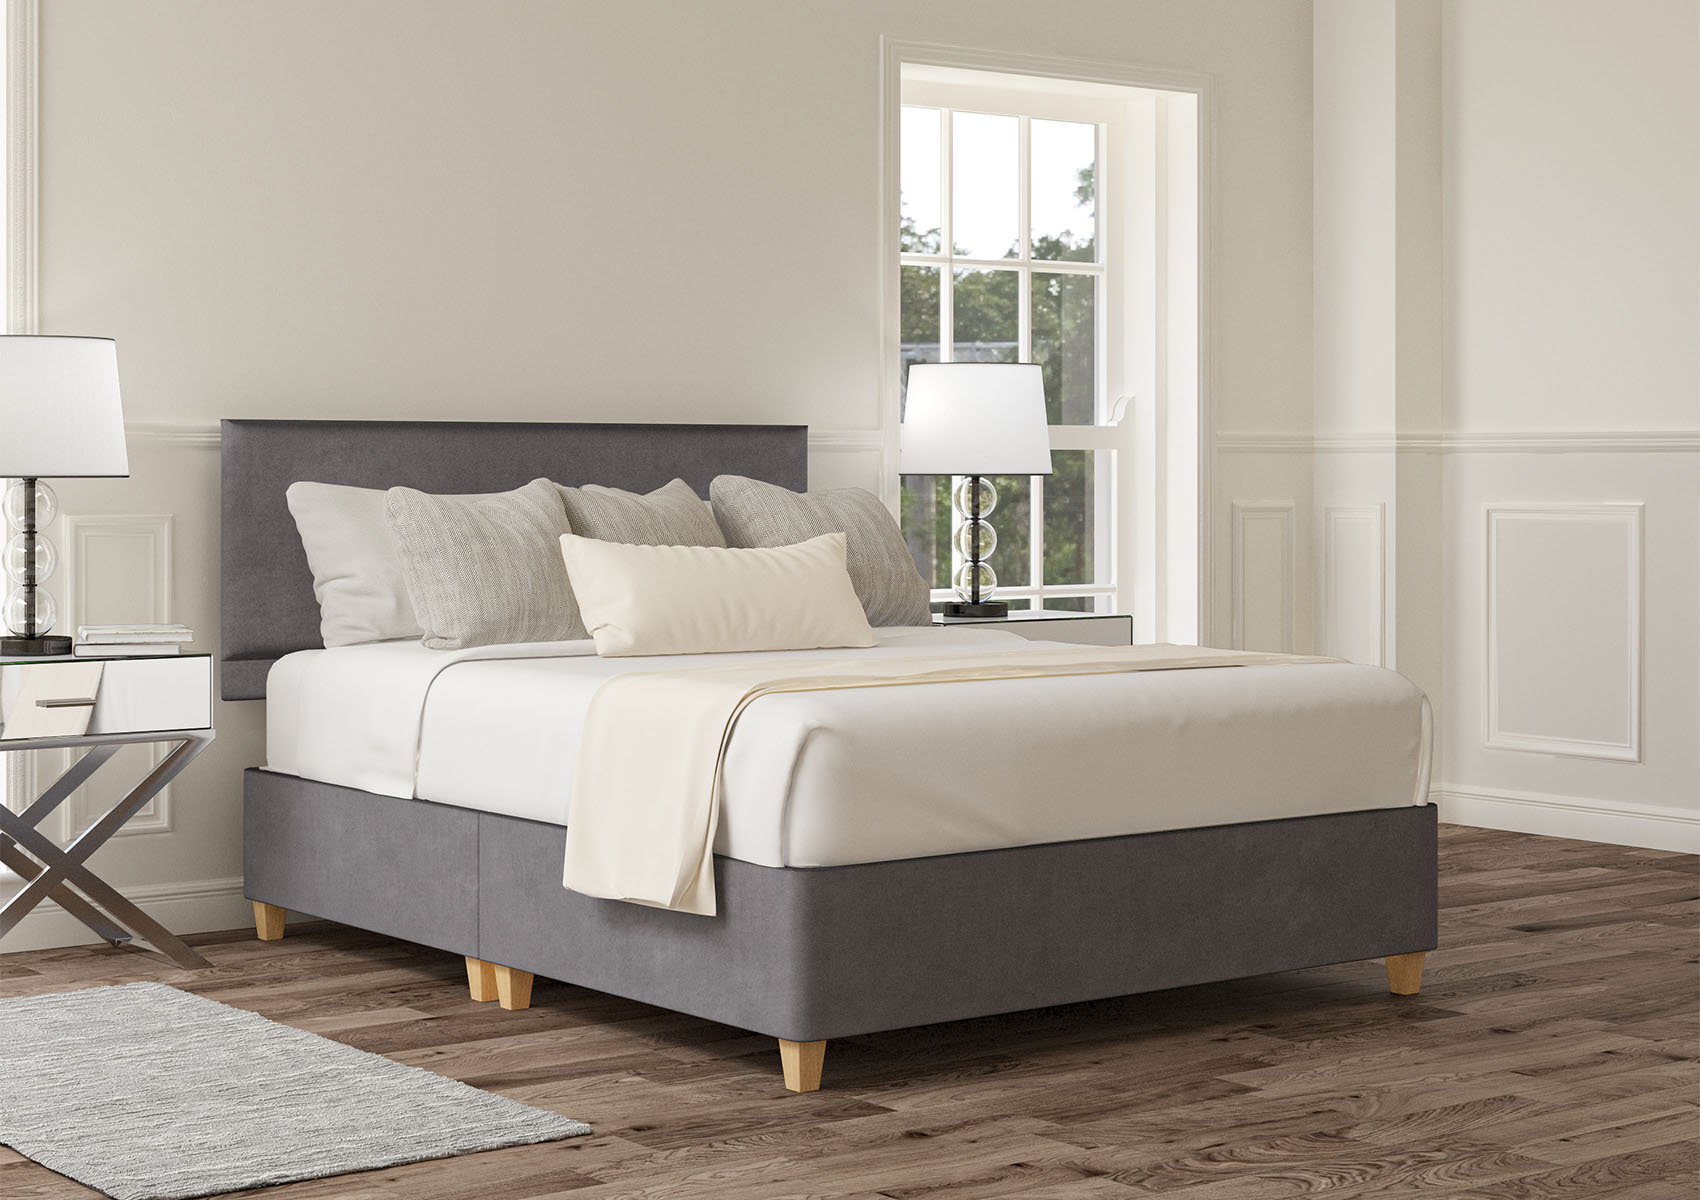 View Henley Plush Mink Upholstered Super King Bed Time4Sleep information